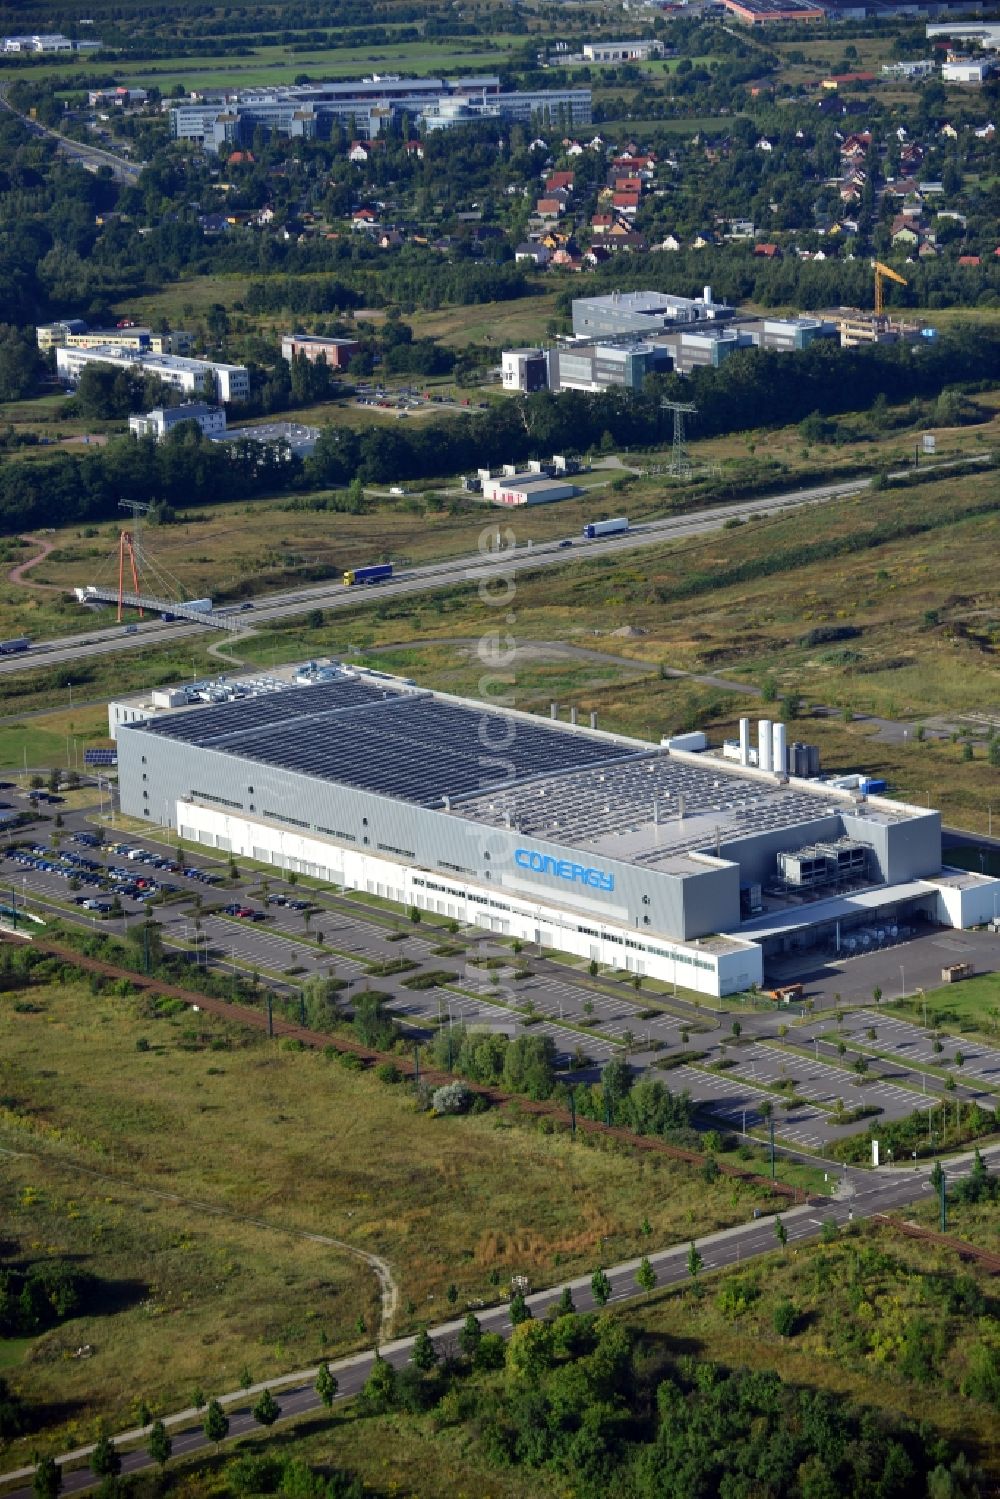 Luftbild Frankfurt (Oder) - CONERGY SolarModule GmbH Fabrik in Frankfurt (Oder) im Bundesland Brandenburg